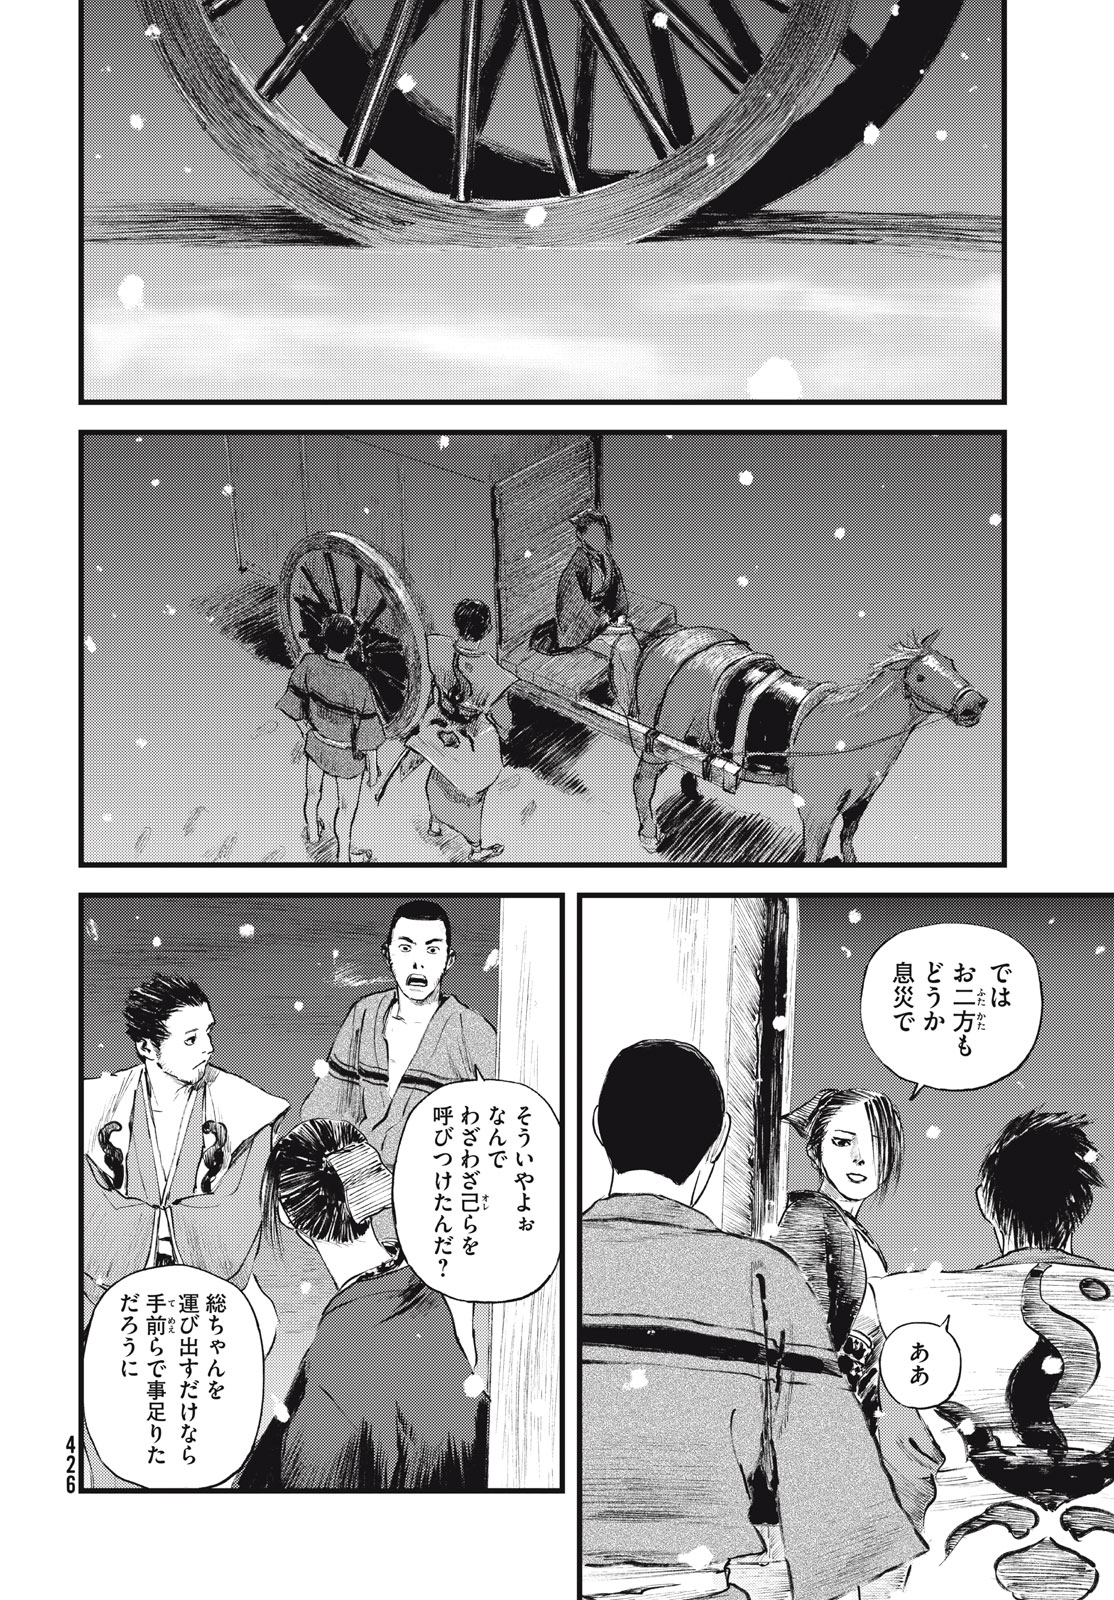 Blade of the Immortal: Bakumatsu Arc - Chapter 56 - Page 12